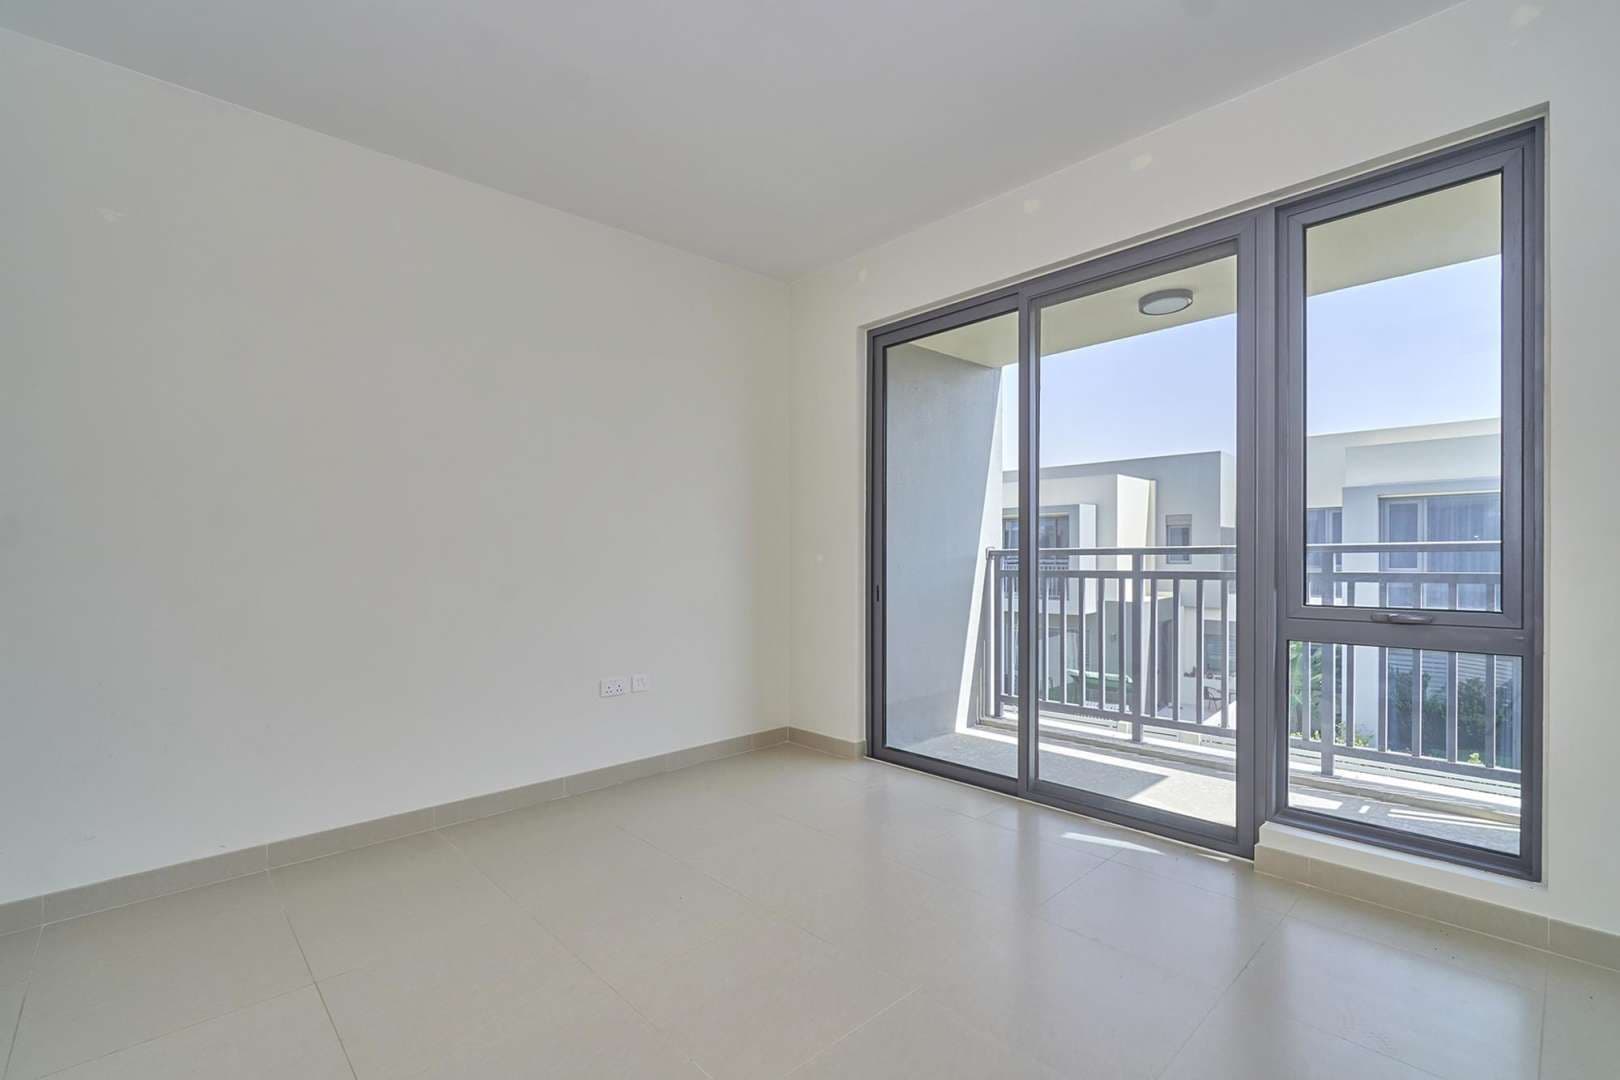 3 Bedroom Townhouse For Rent Maple At Dubai Hills Estate Lp06754 4fdafcf631a1c80.jpg